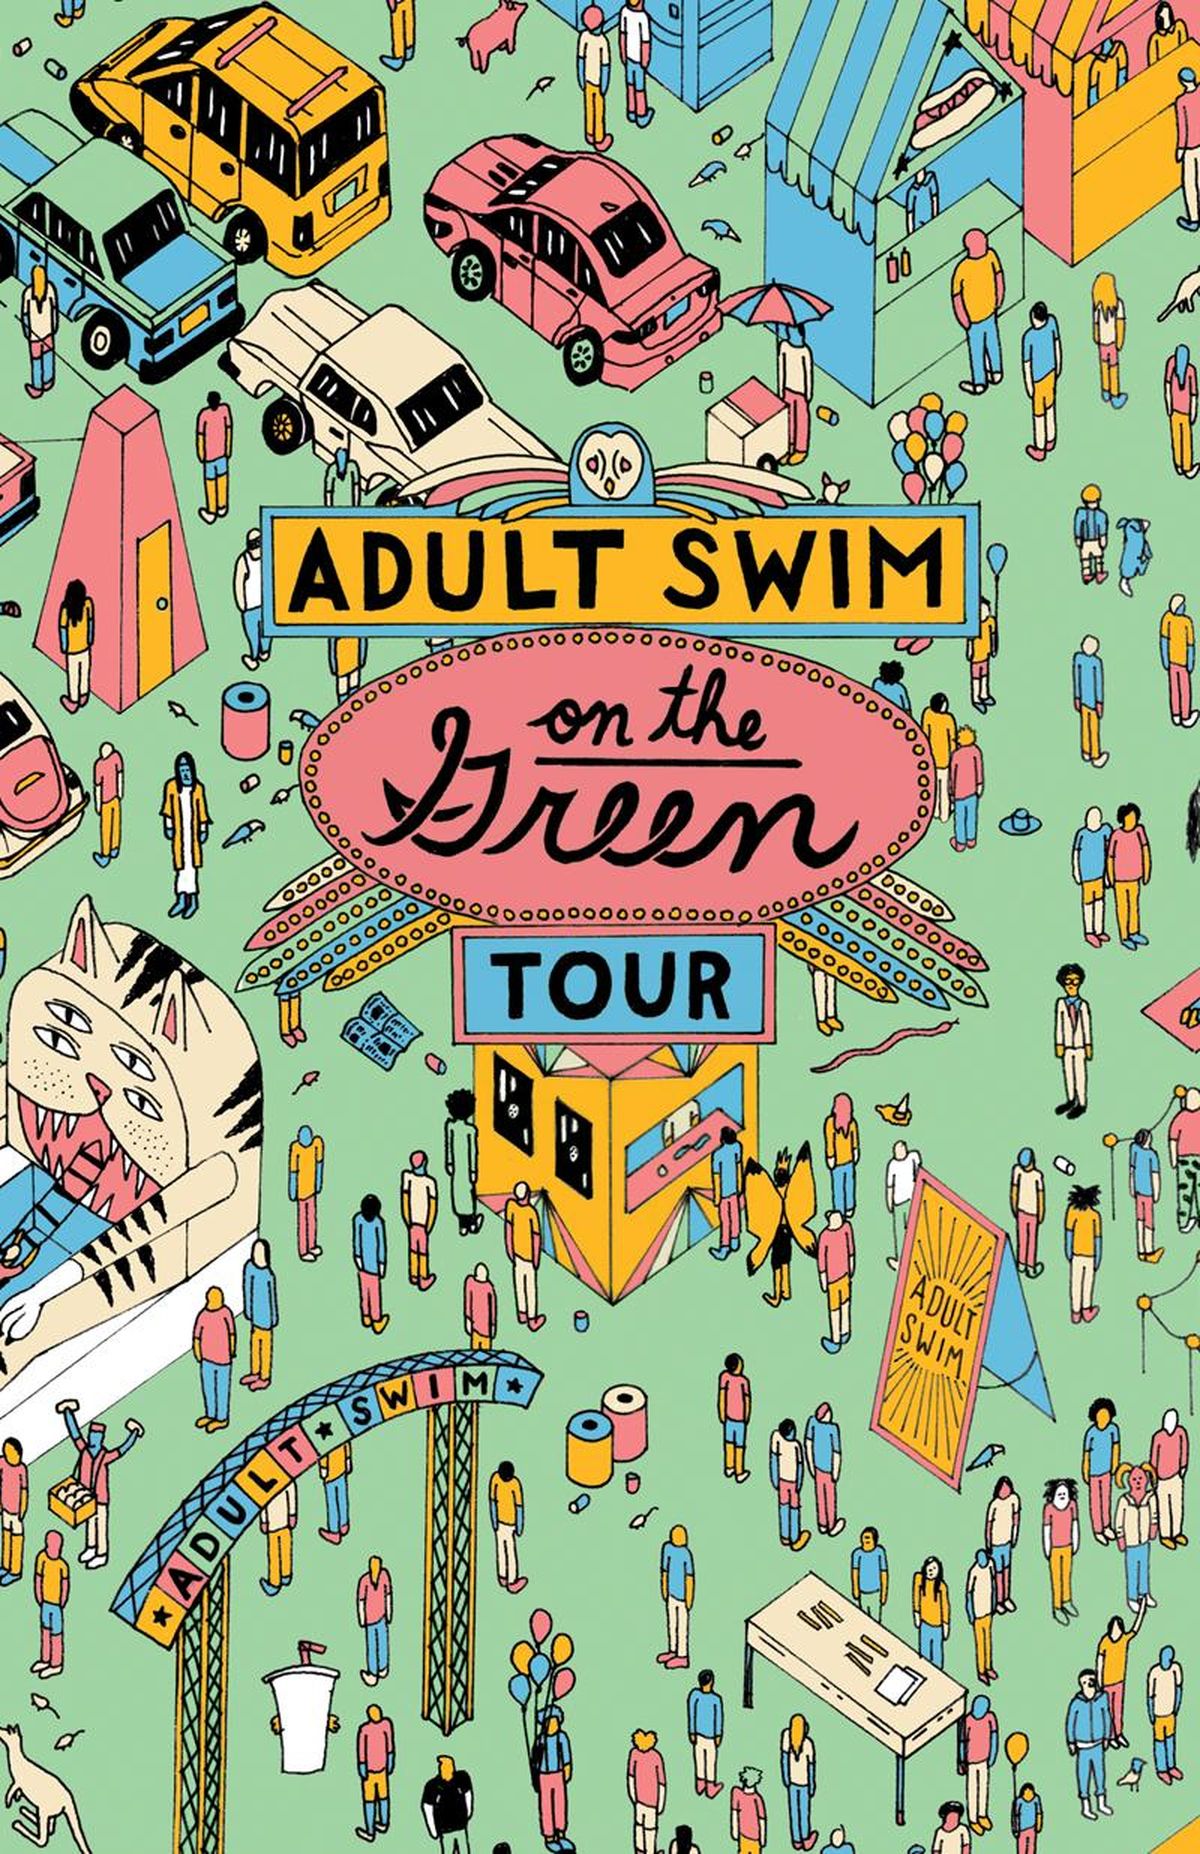 Adult Swim “On the Green” tour artwork (Courtesy of Adult Swim)